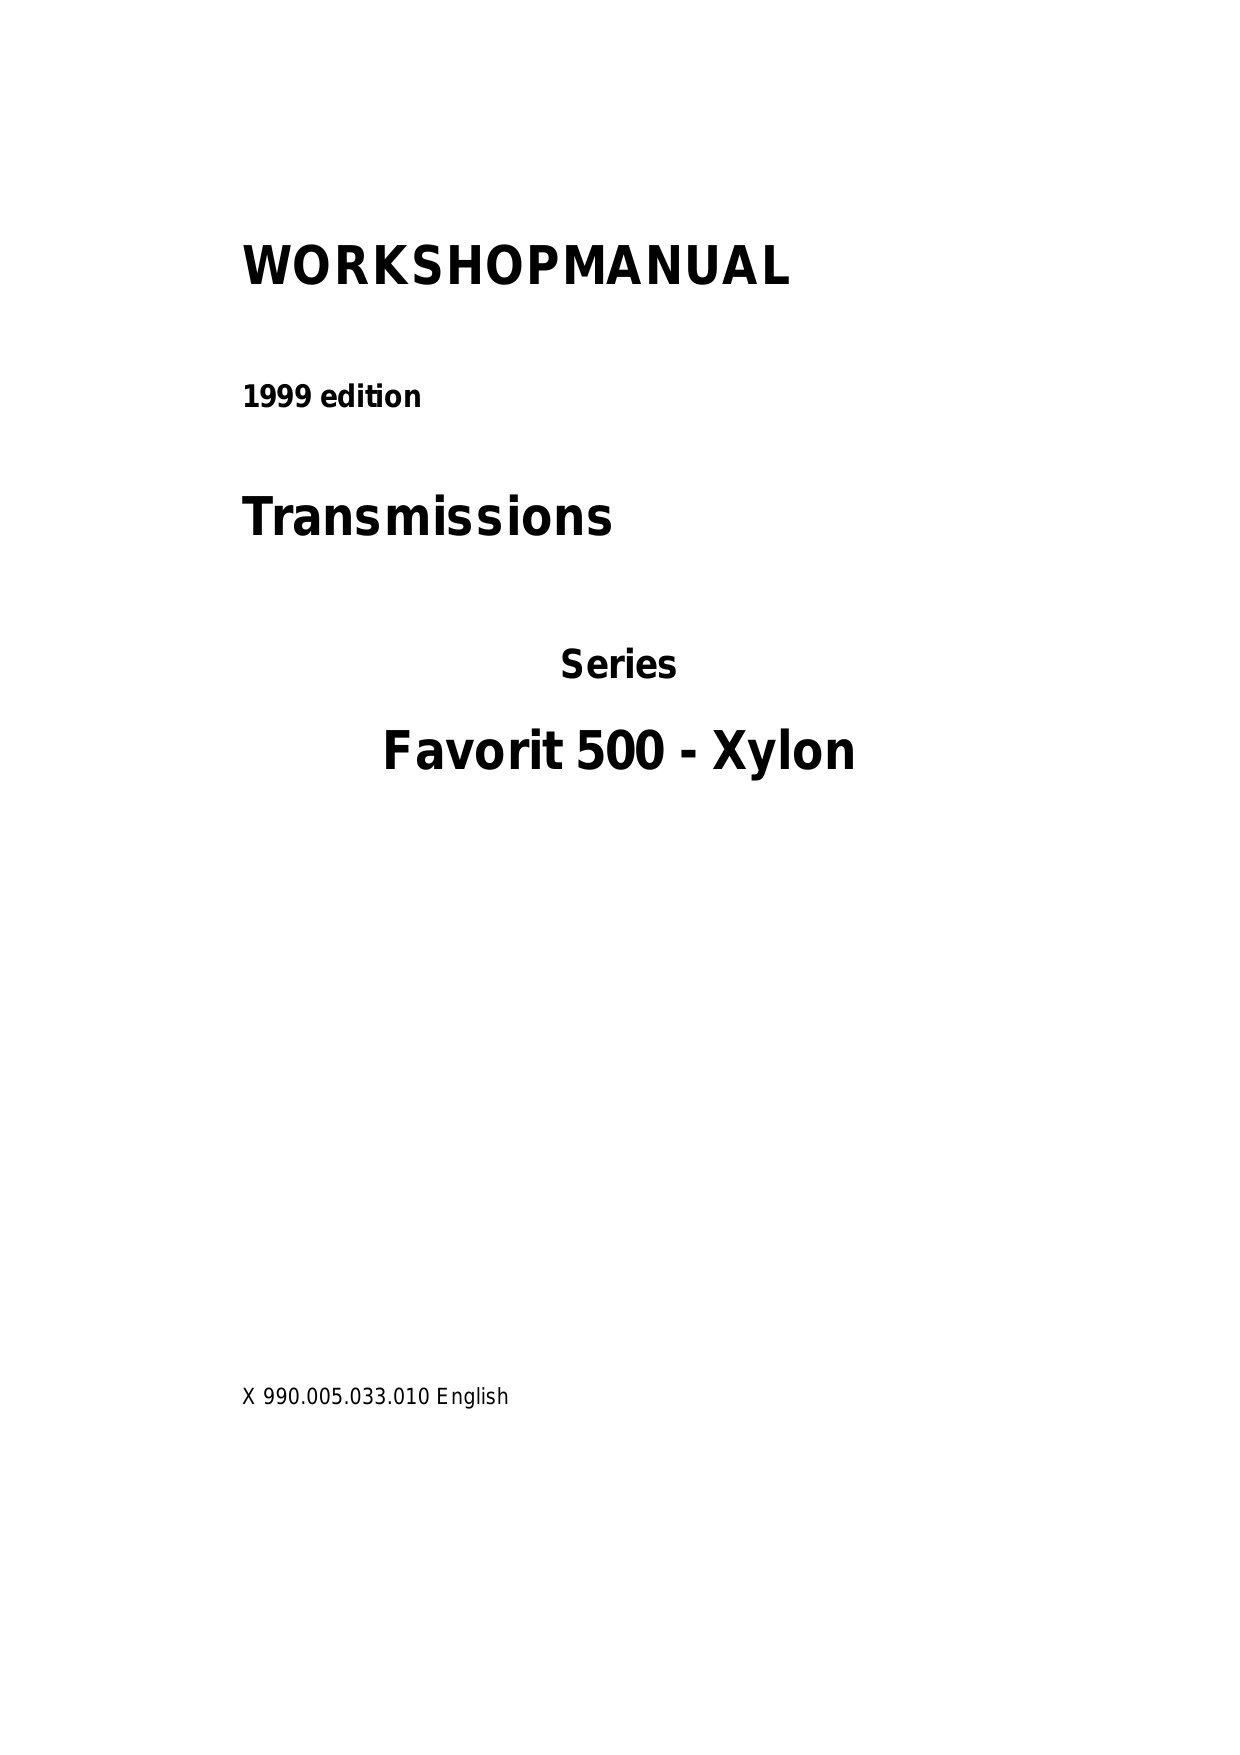 1999 Fendt Favorit 500, 509 C Xylon transmission workshop manual Preview image 1